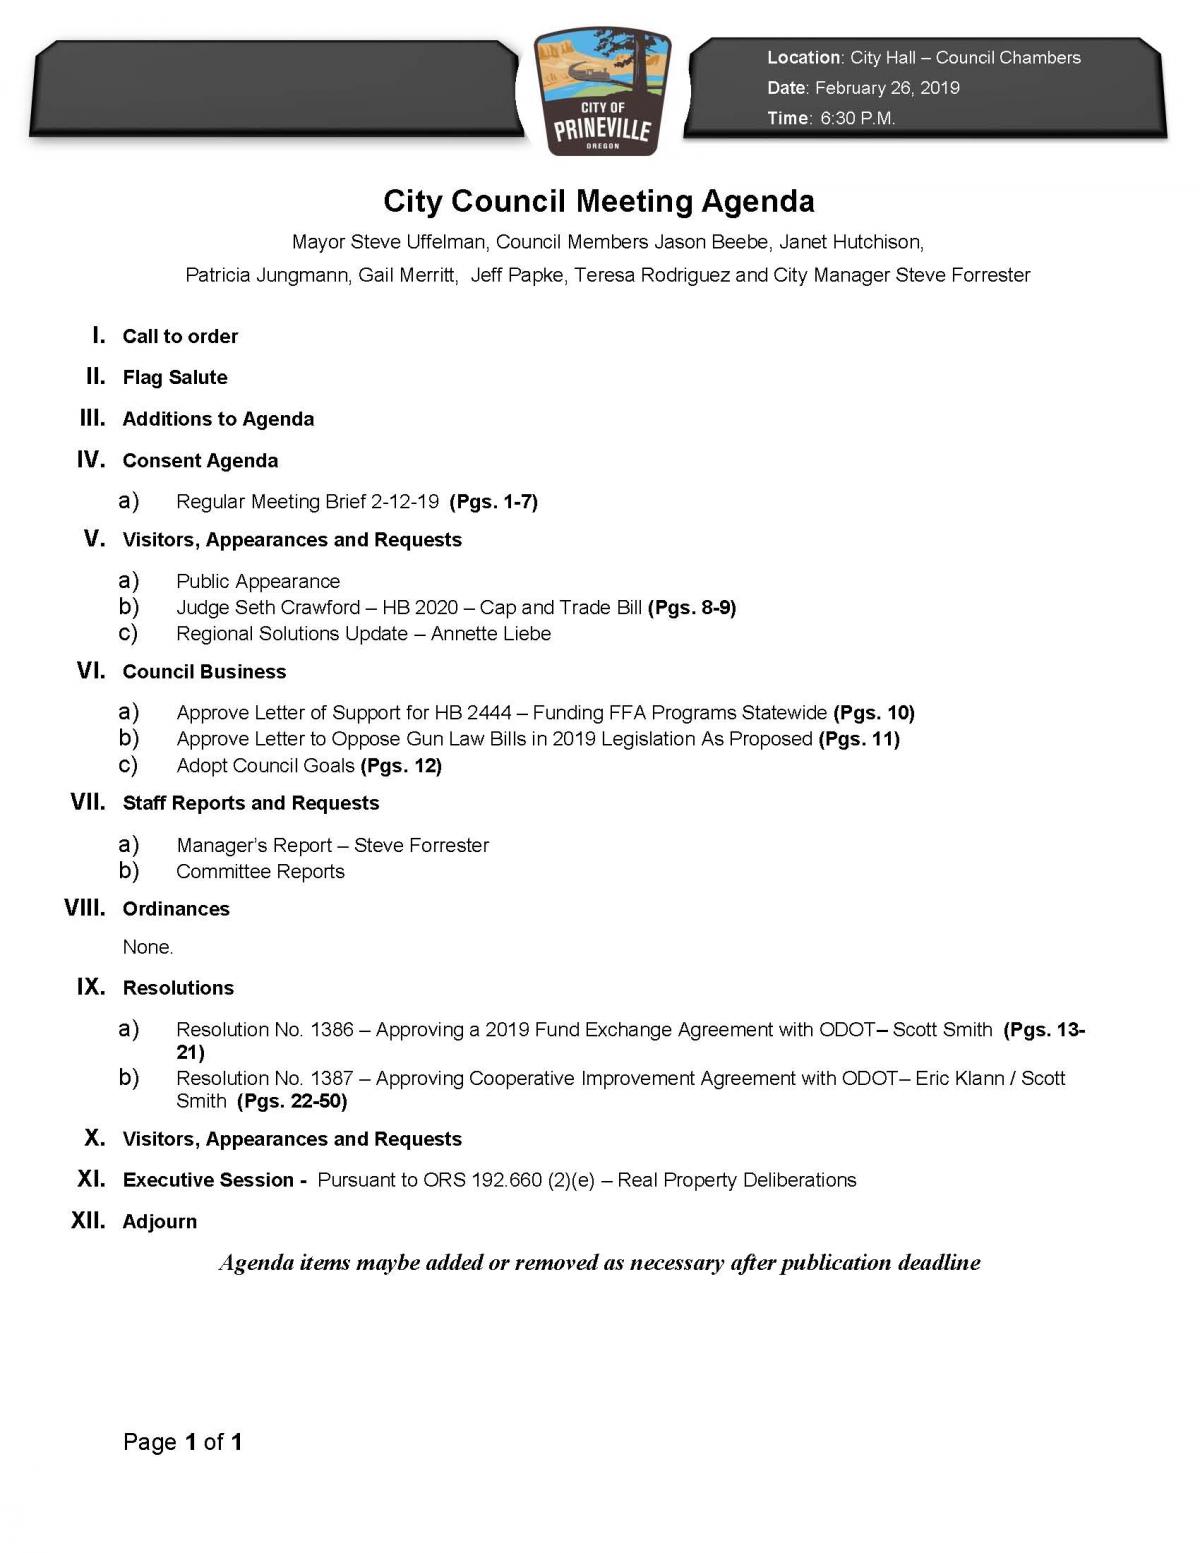 Council Agenda 2-26-19